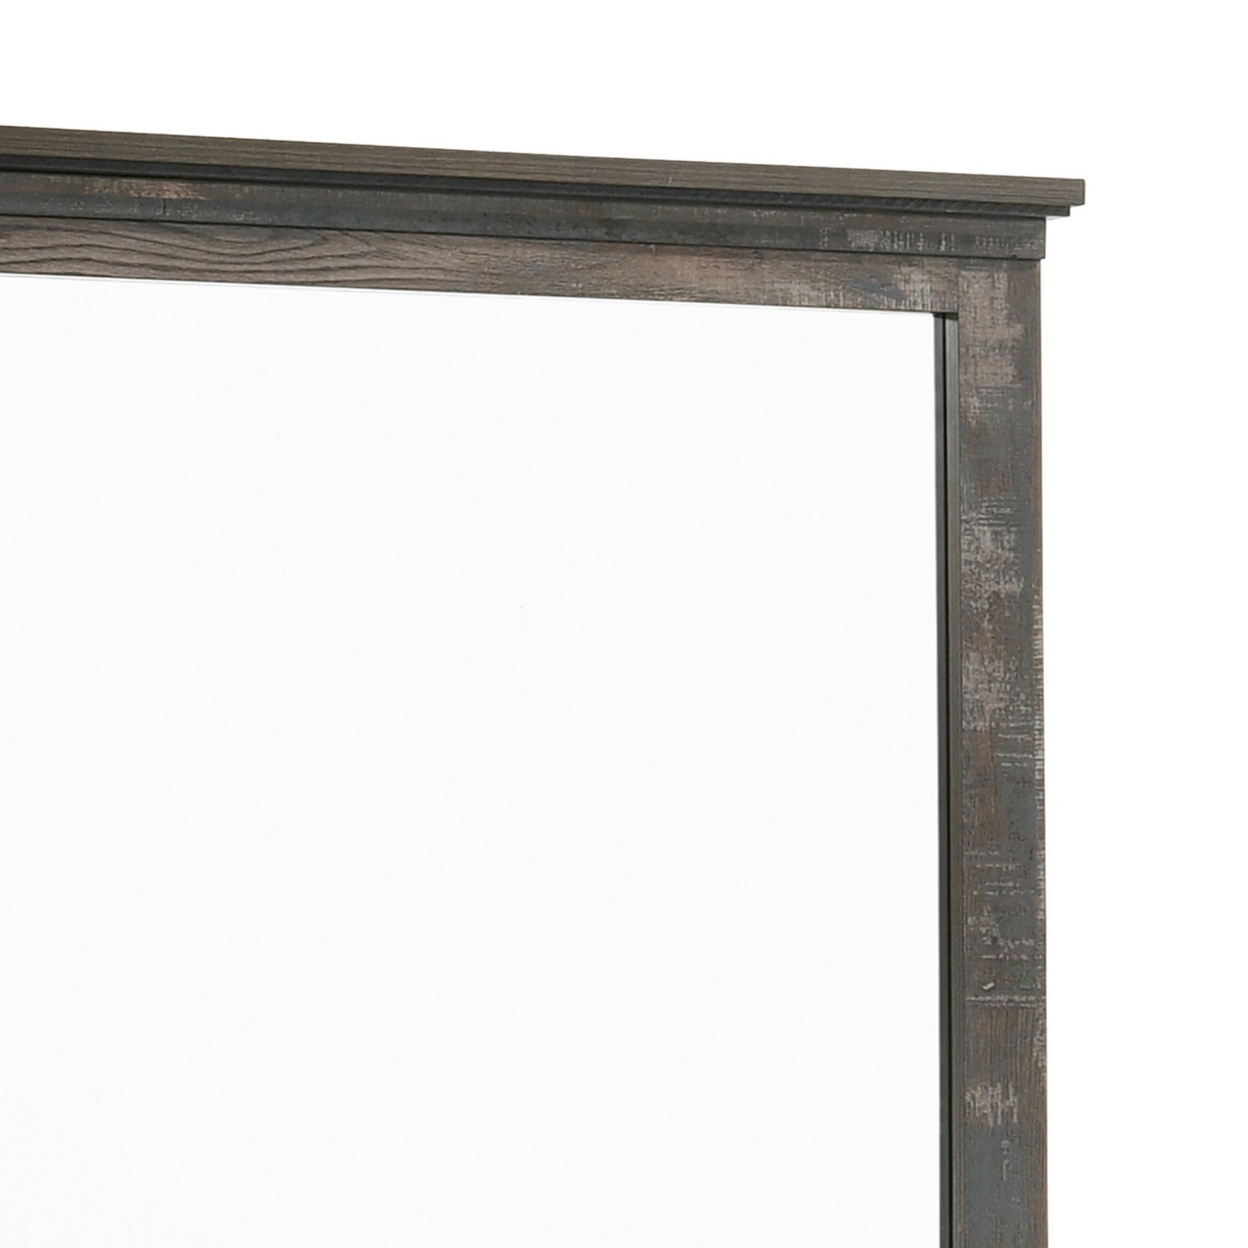 Rectangular Mirror With Wooden Encasing And Grains, Dark Brown- Saltoro Sherpi